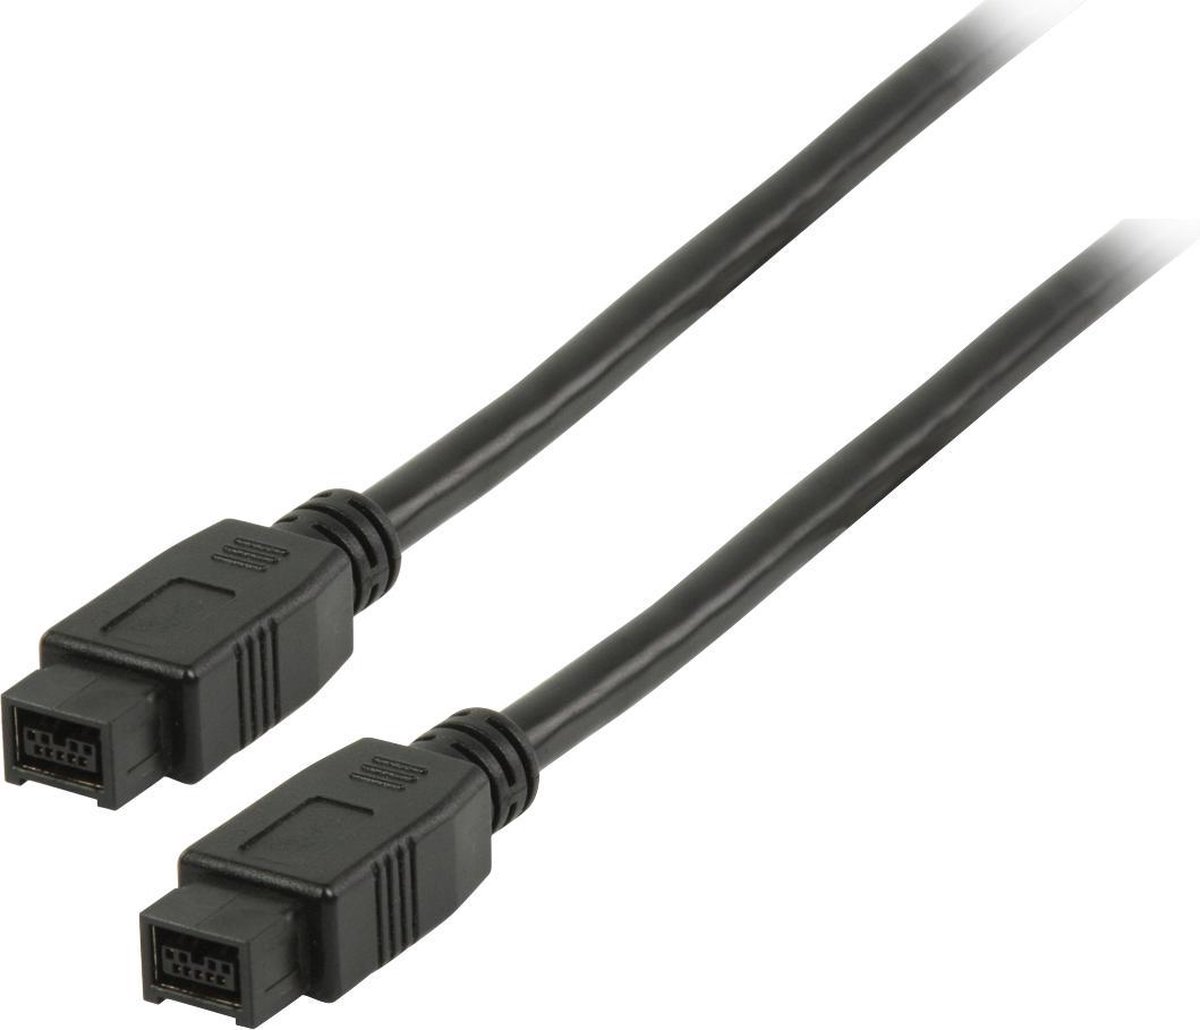 Valueline Firewire 800 9 naar 9 pins kabel 2m